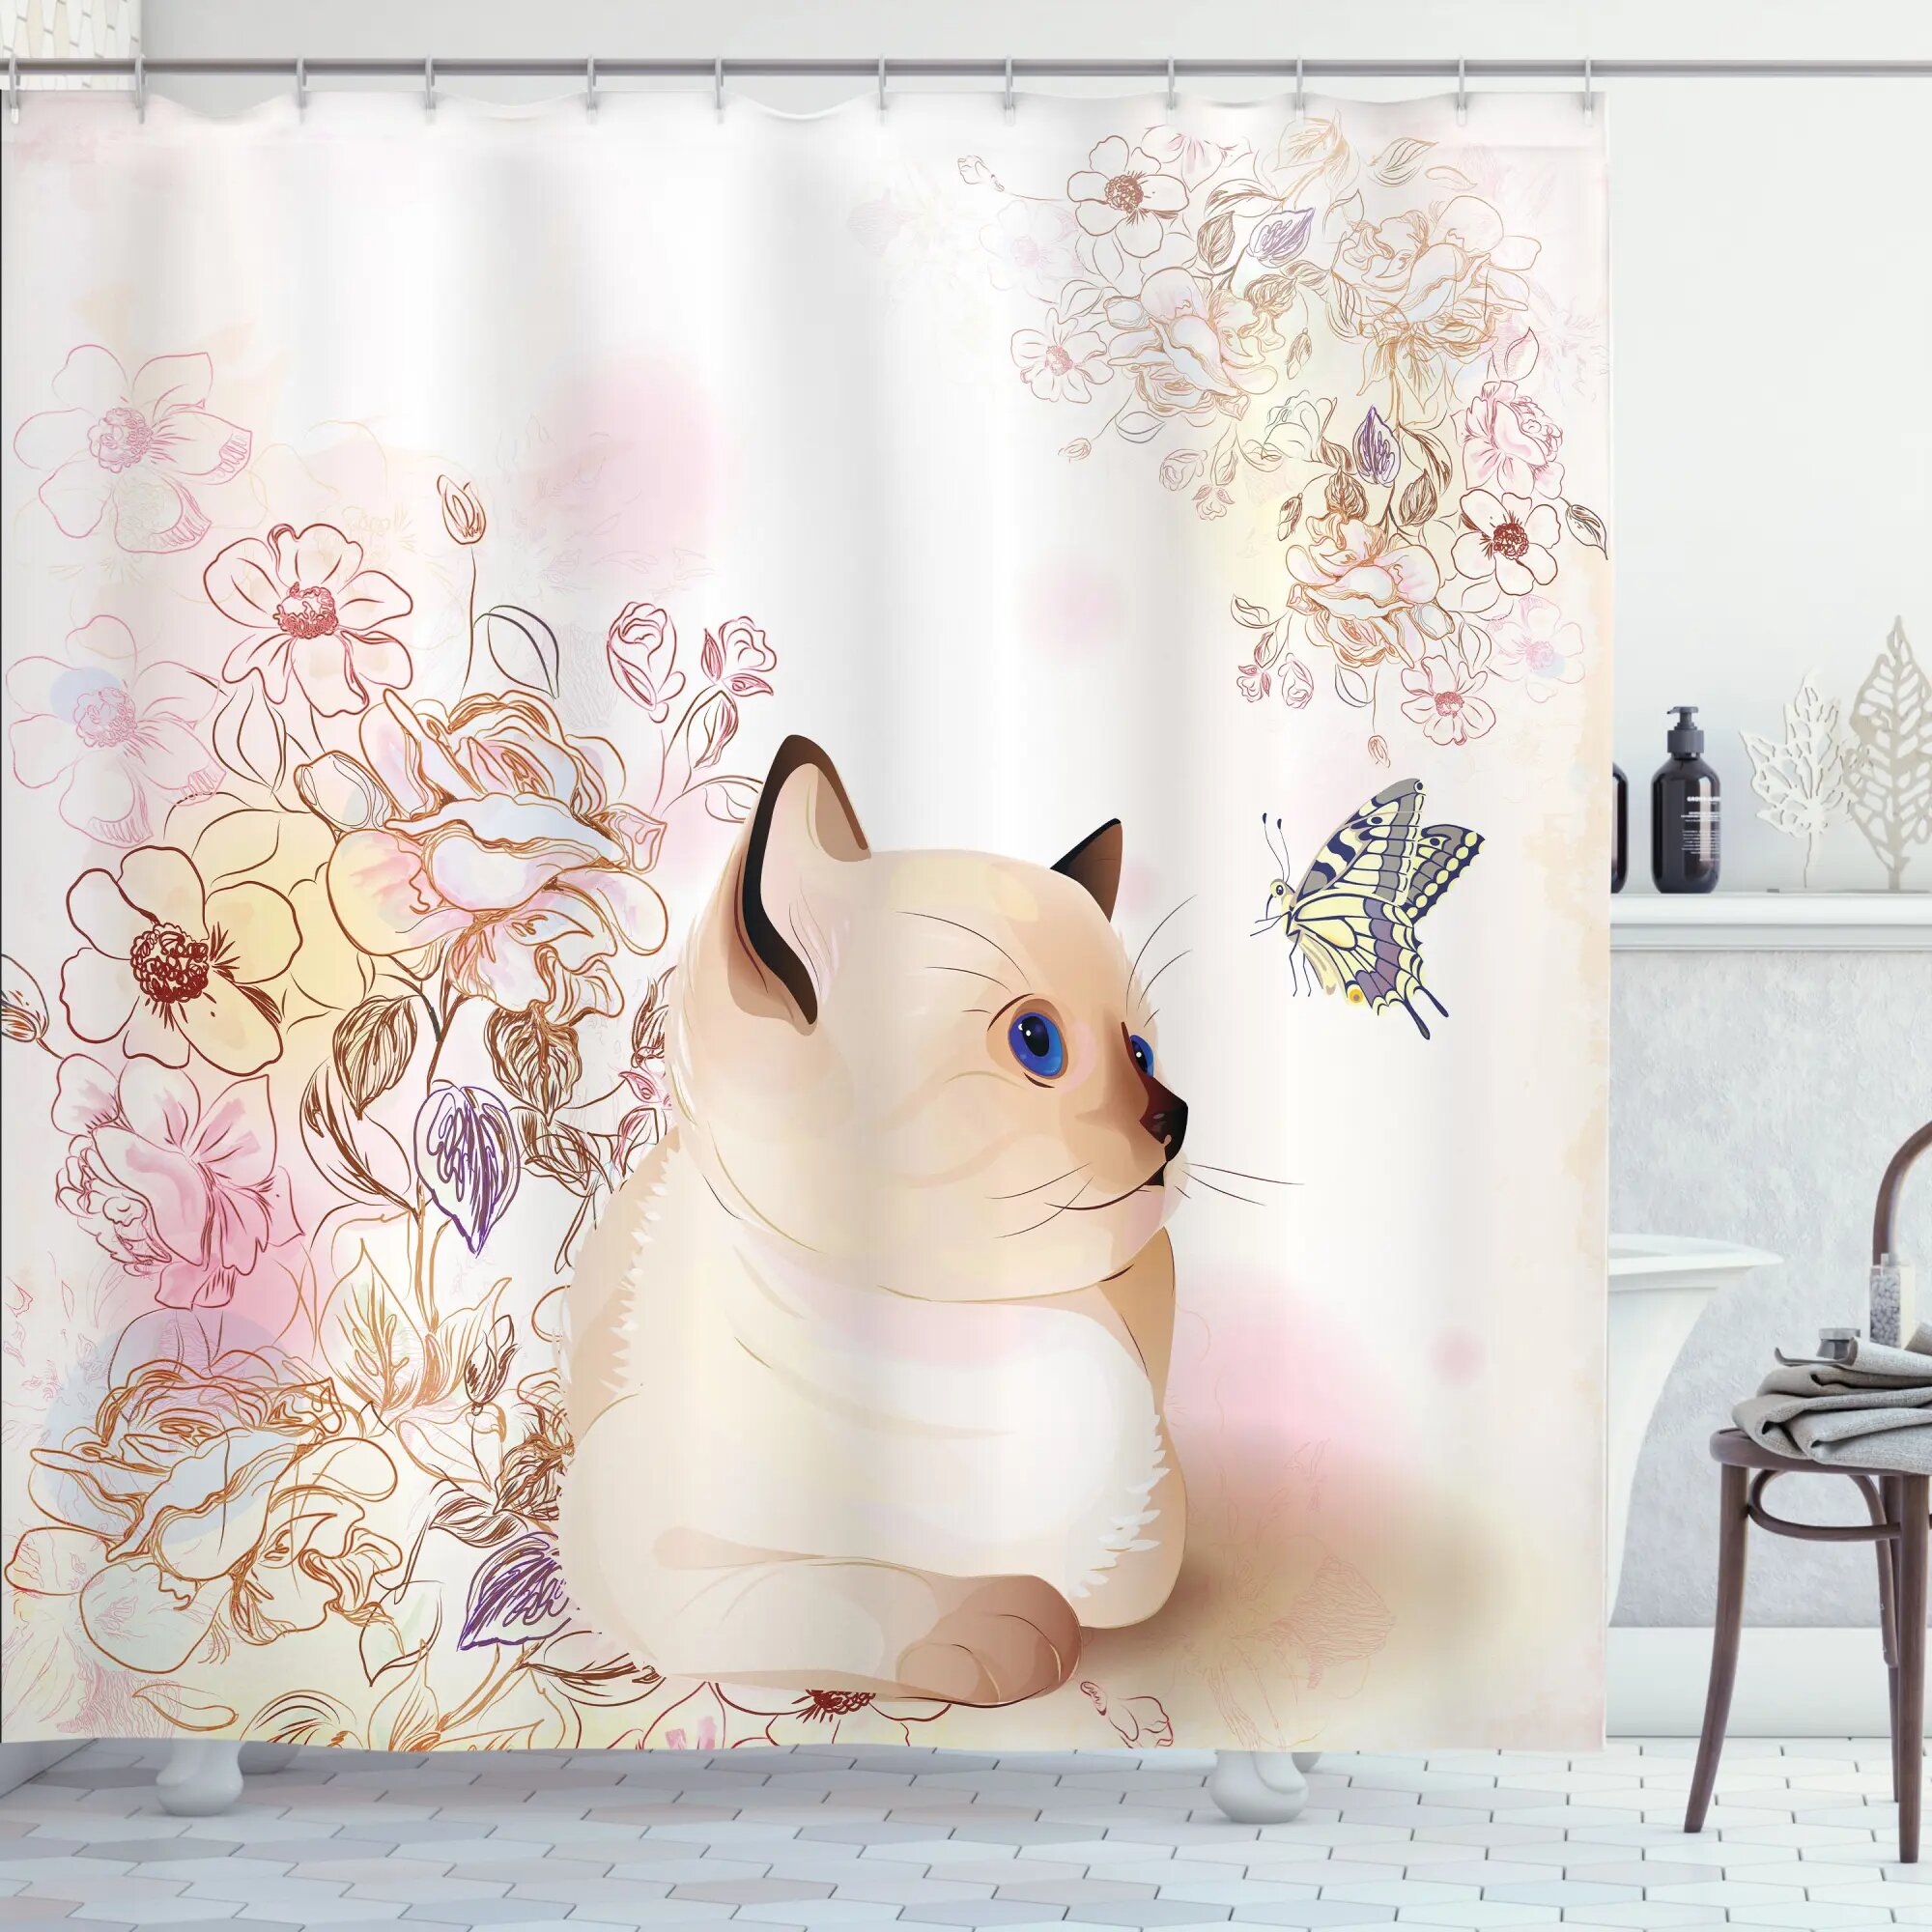 Cute Pink Hello Kitty Shower Curtain Waterproof Bathroom Decor with 10 Hooks